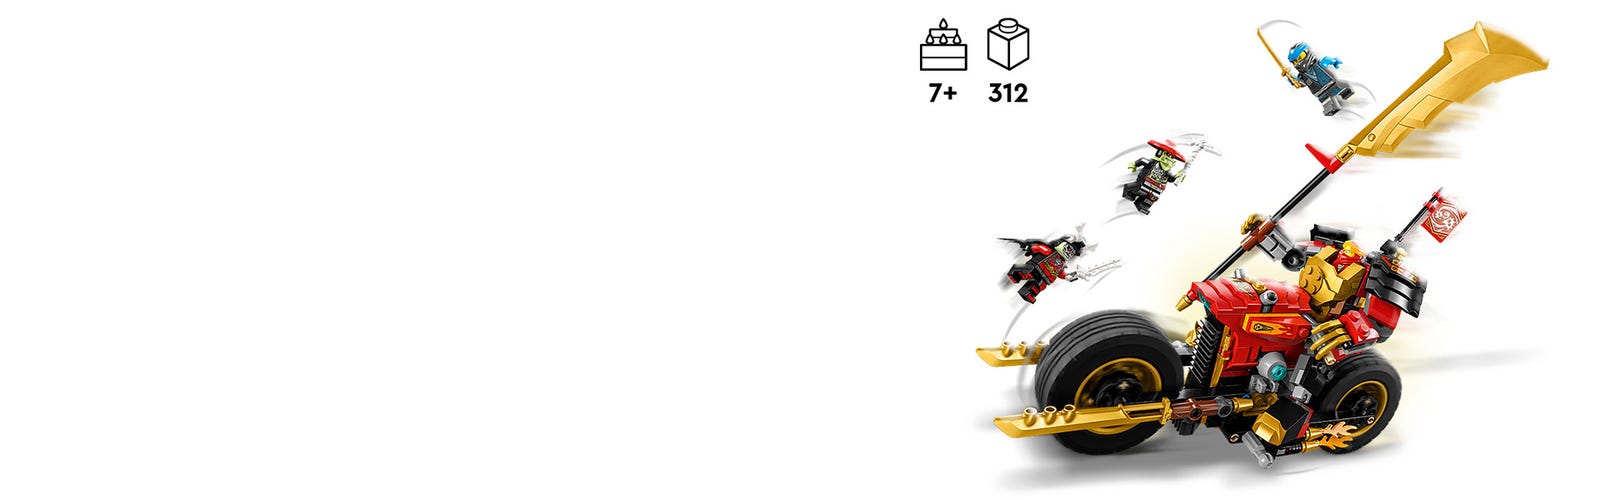 Kai\'s Mech Rider EVO 71783 | NINJAGO® | Buy online at the Official LEGO®  Shop US